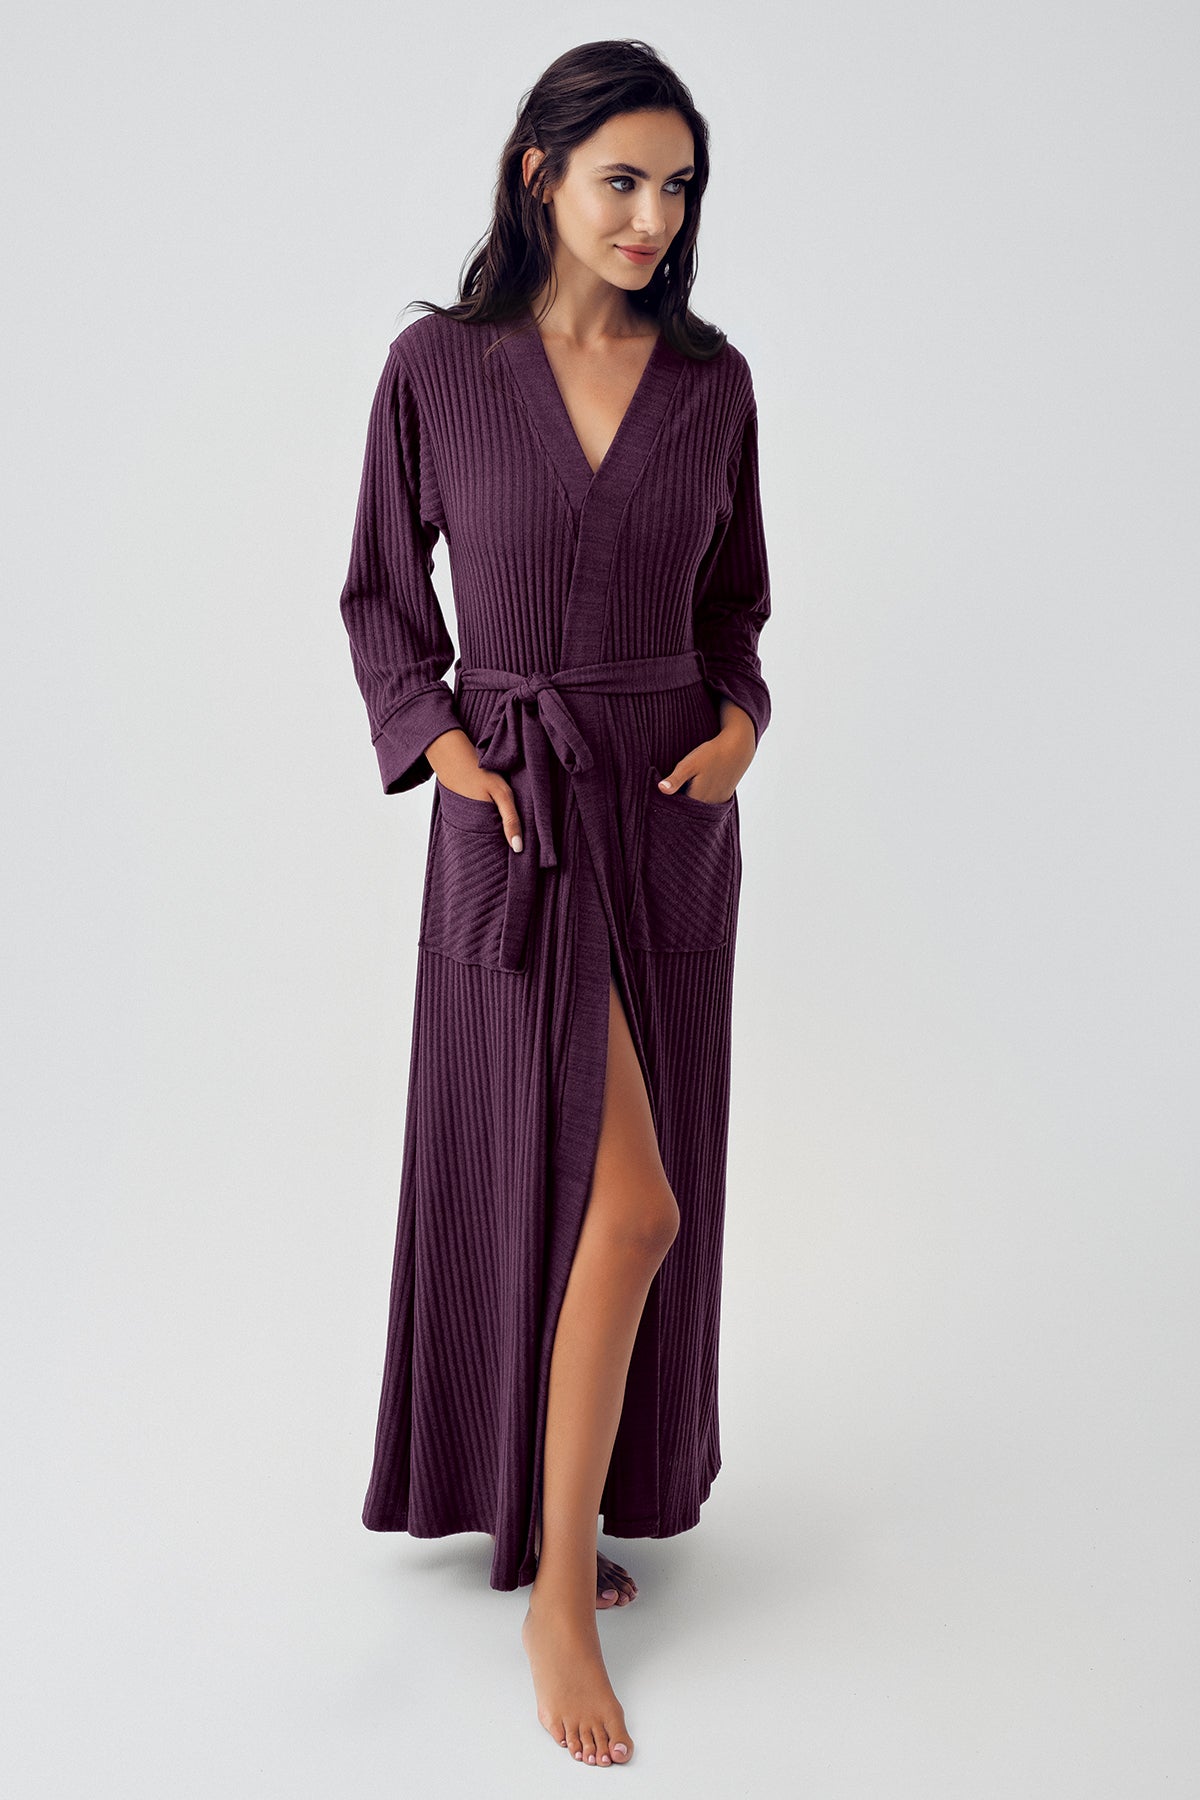 Shopymommy 15508 Jacquard Knitwear Long Maternity Robe Purple